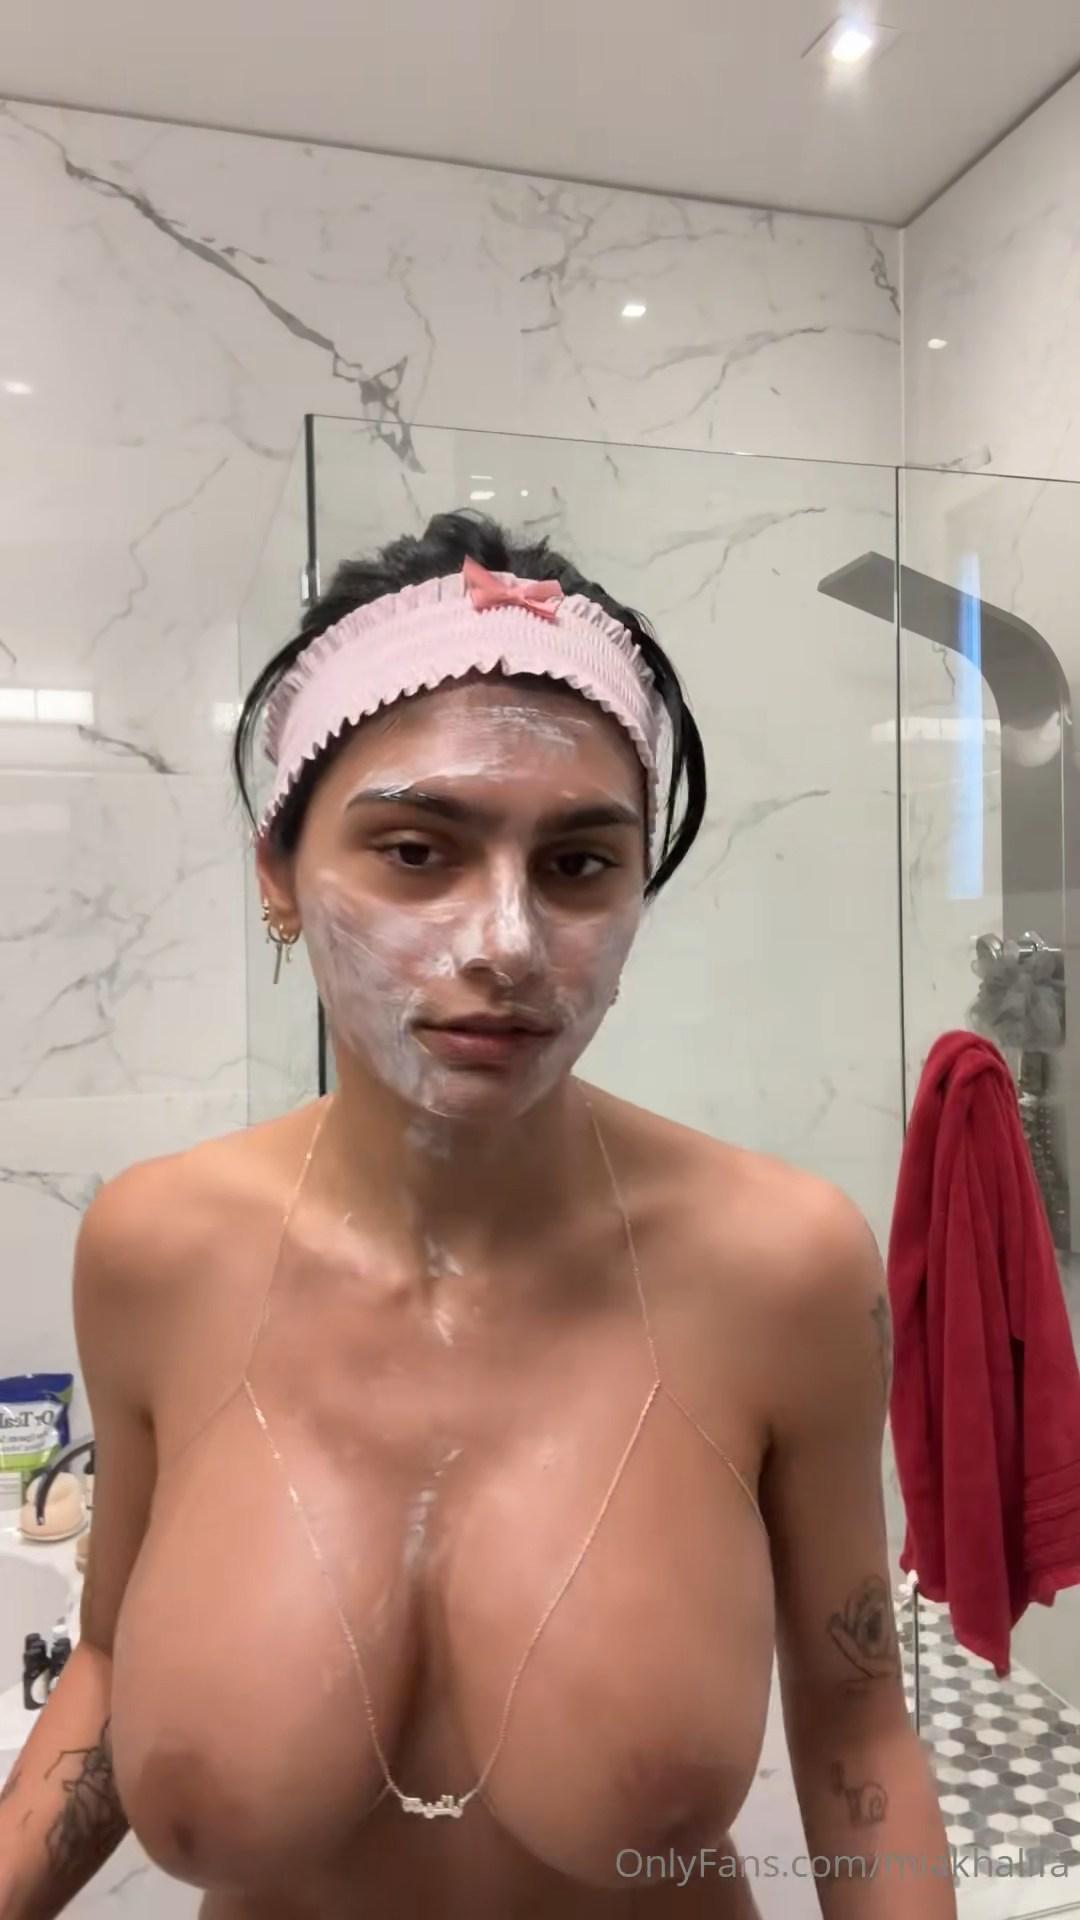 mia khalifa nude shower prep part 2 onlyfans video leaked ajekzk